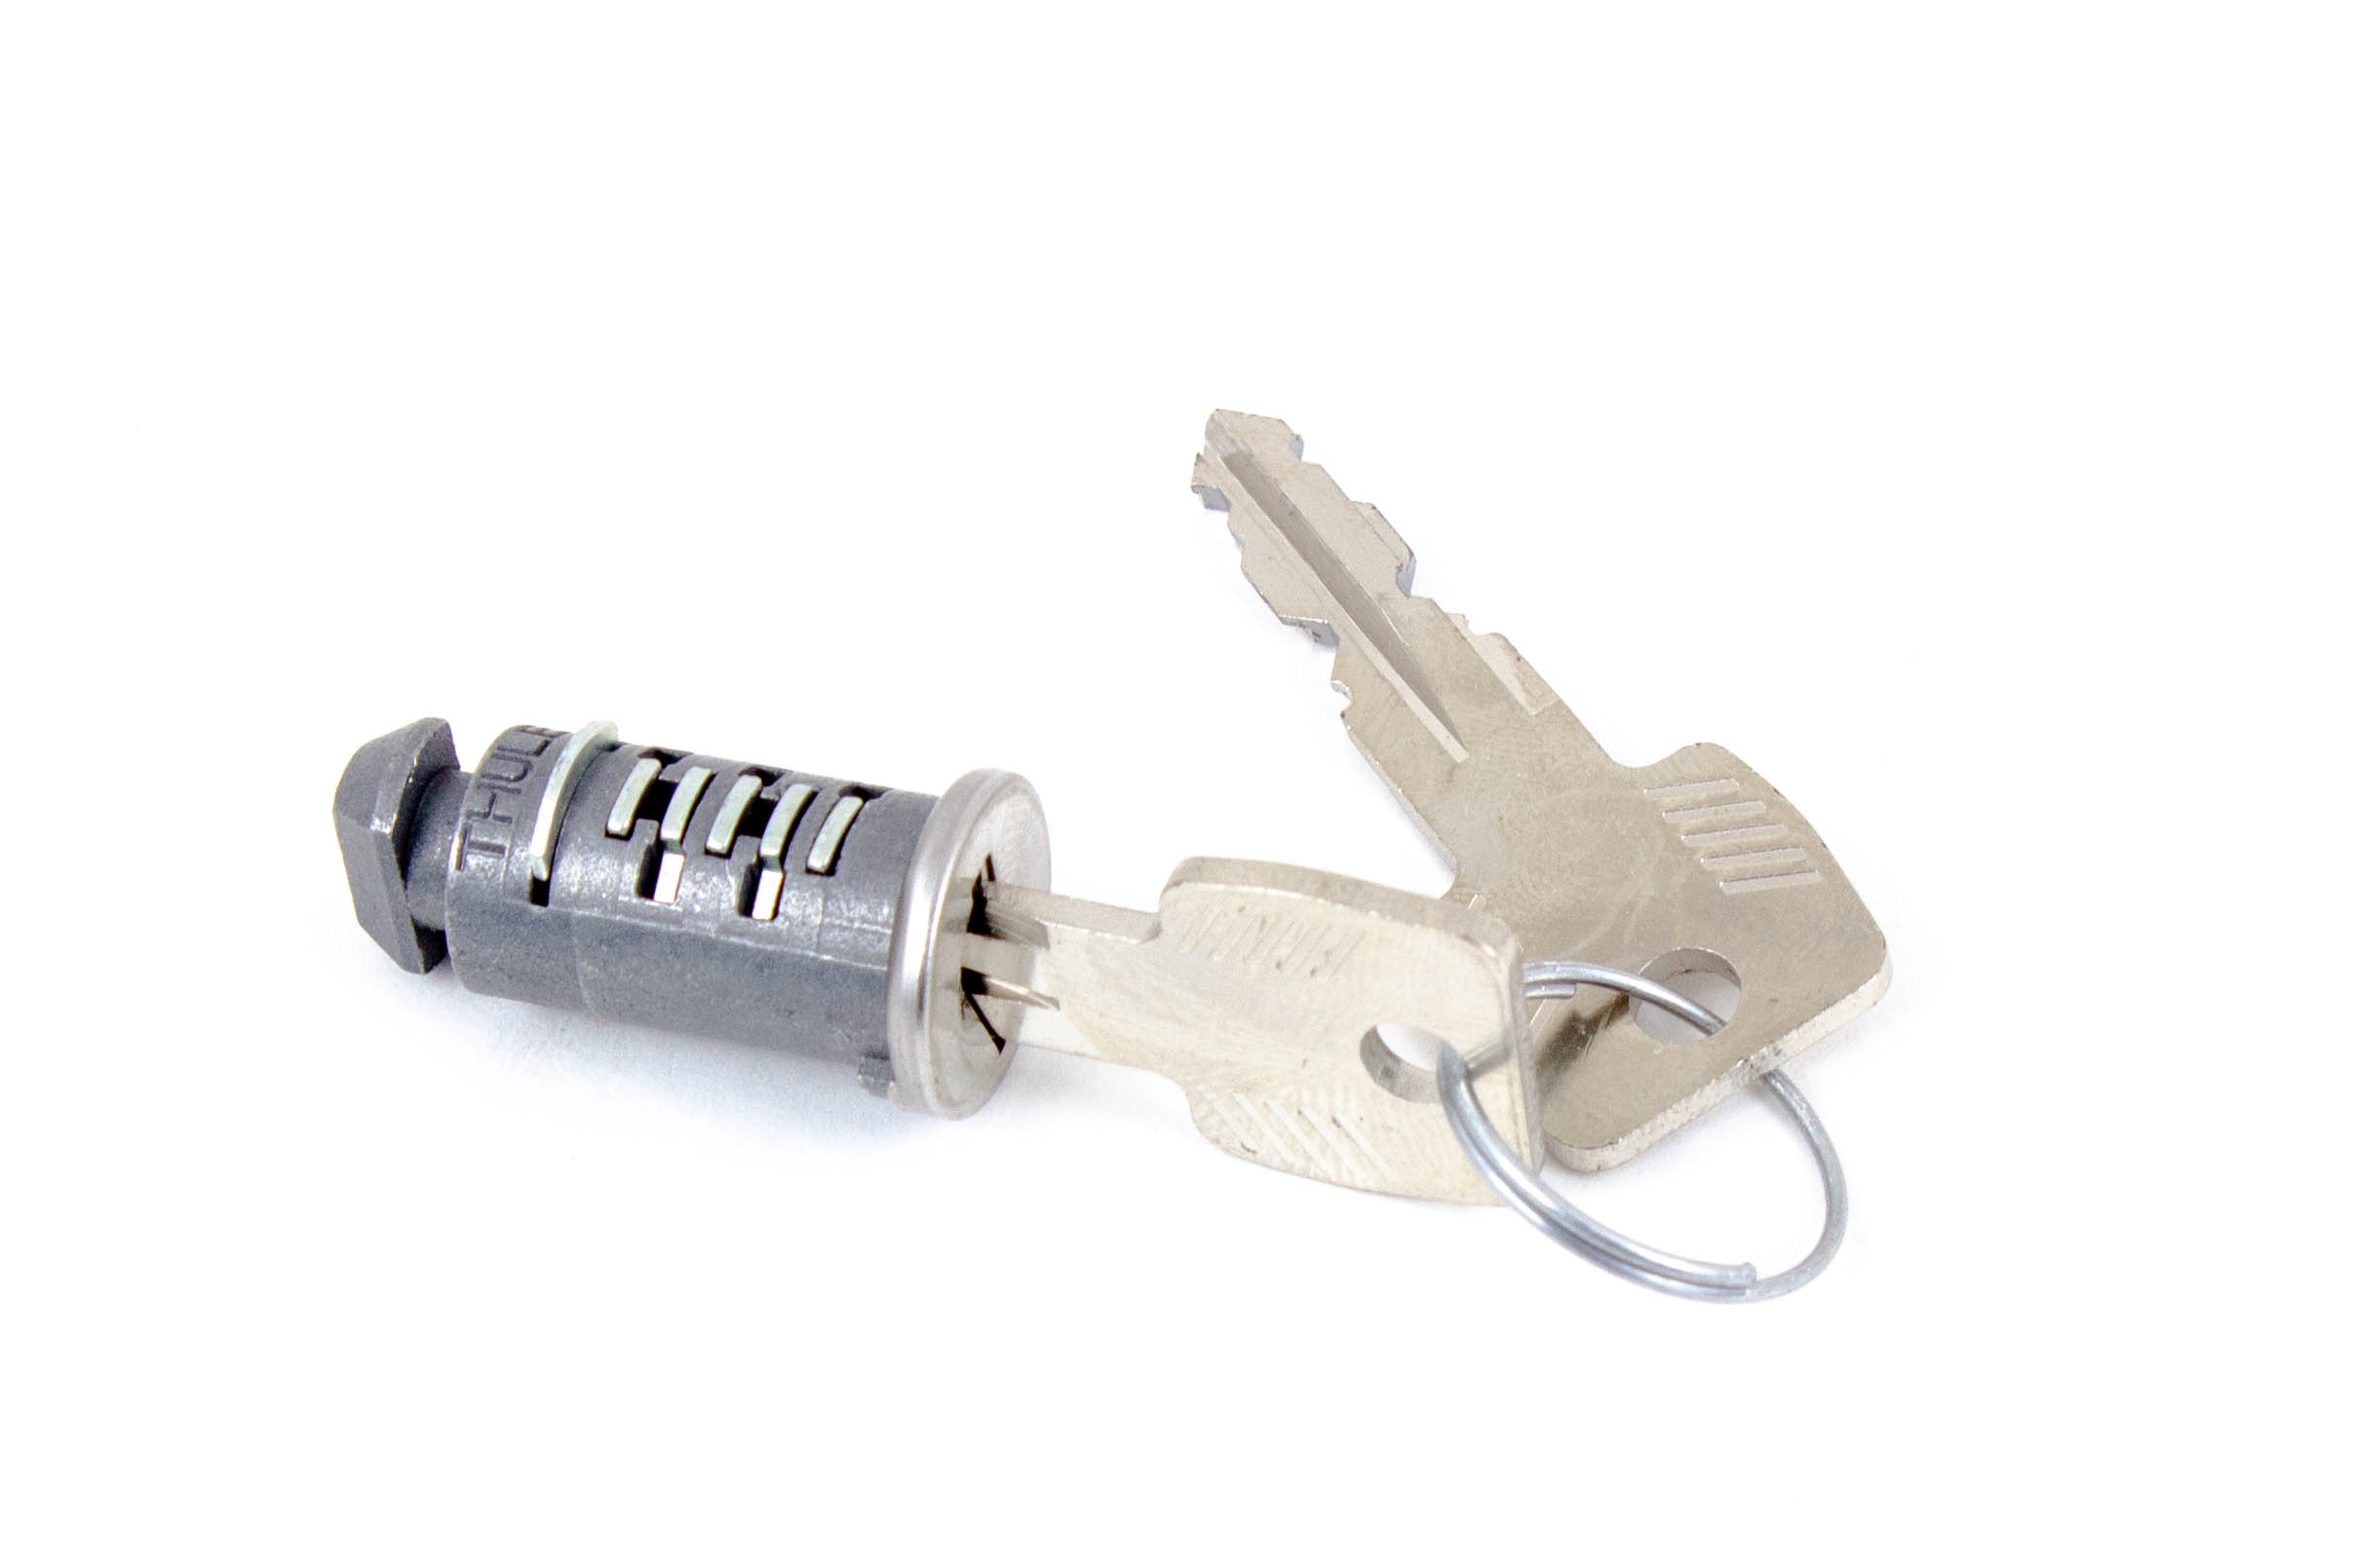 NEW SEALED Thule 596 6 Lock set of matching cylinders & keys 